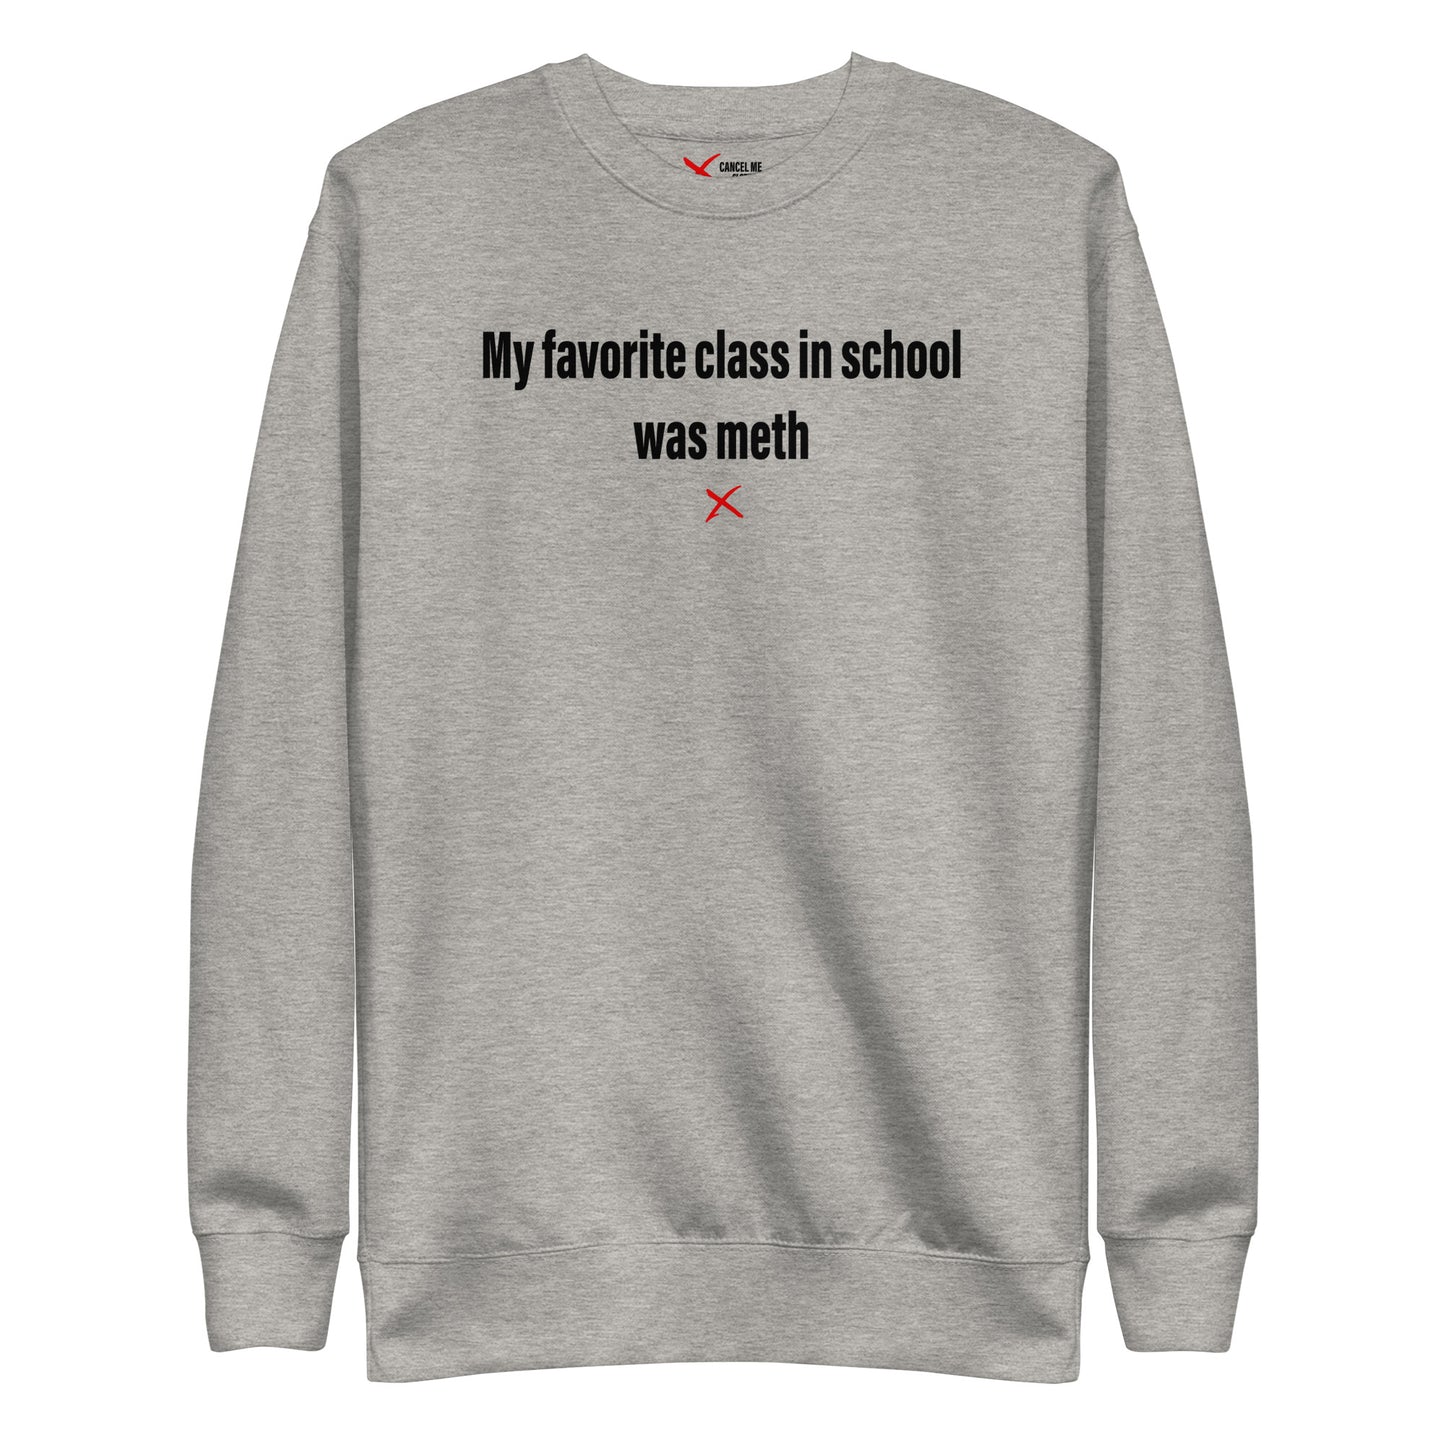 My favorite class in school was meth - Sweatshirt